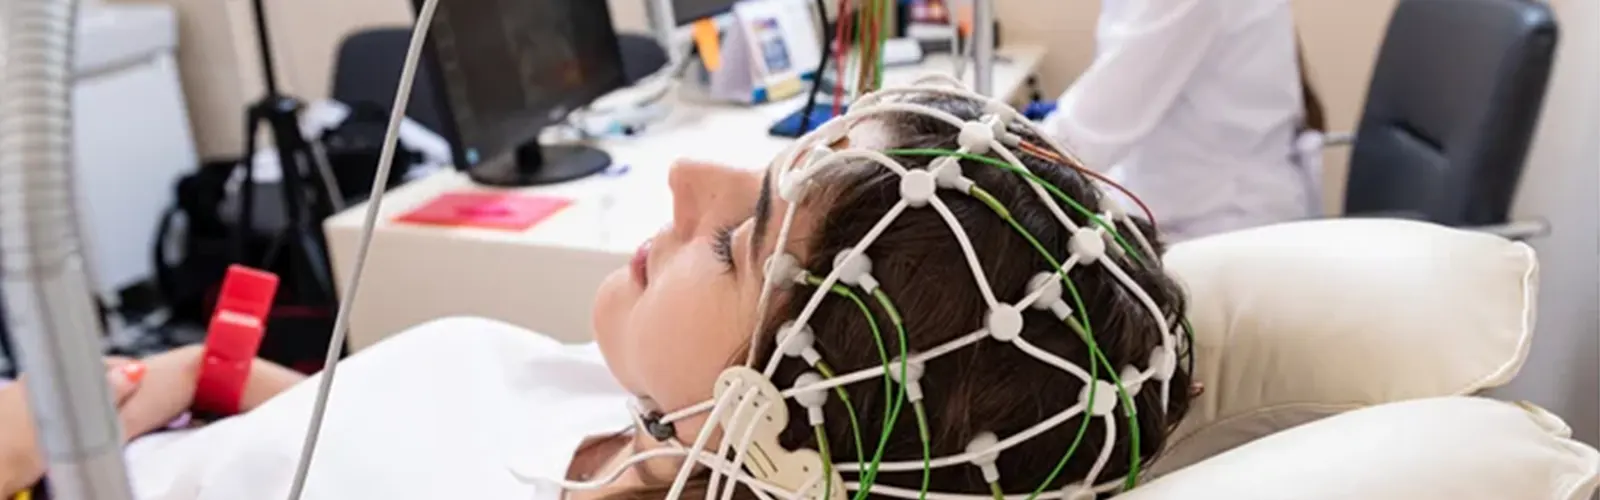 Types of EEG Test?